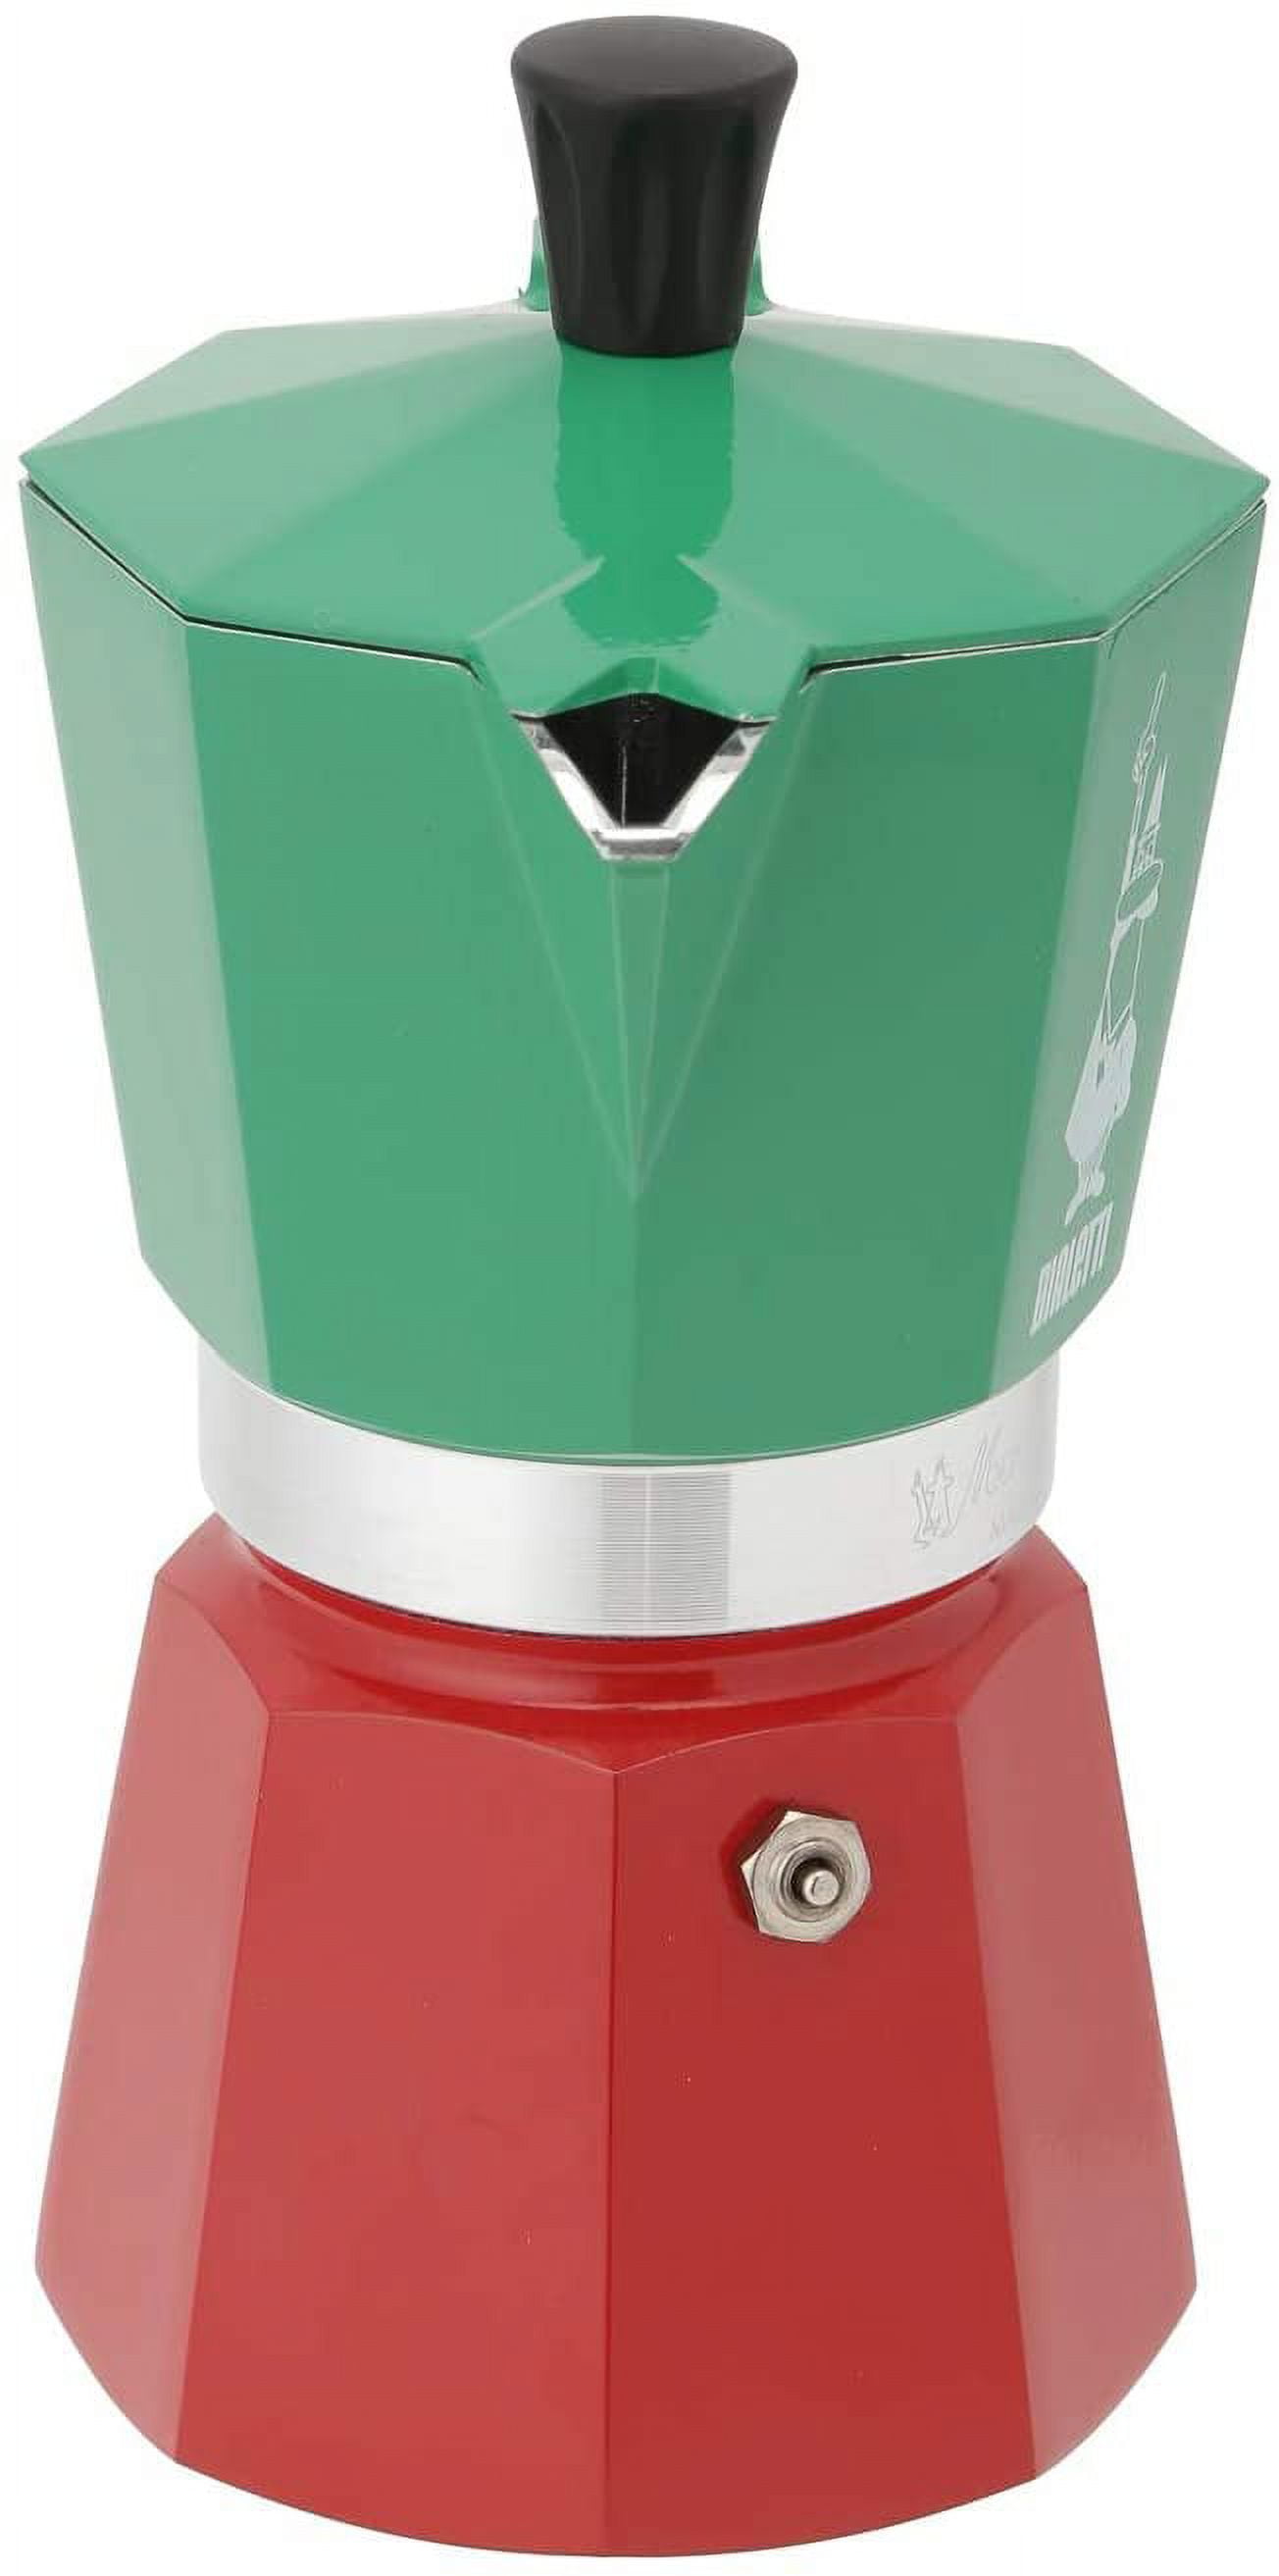 Bialetti Moka Express Stovetop Espresso Maker – 6 Cup – Red